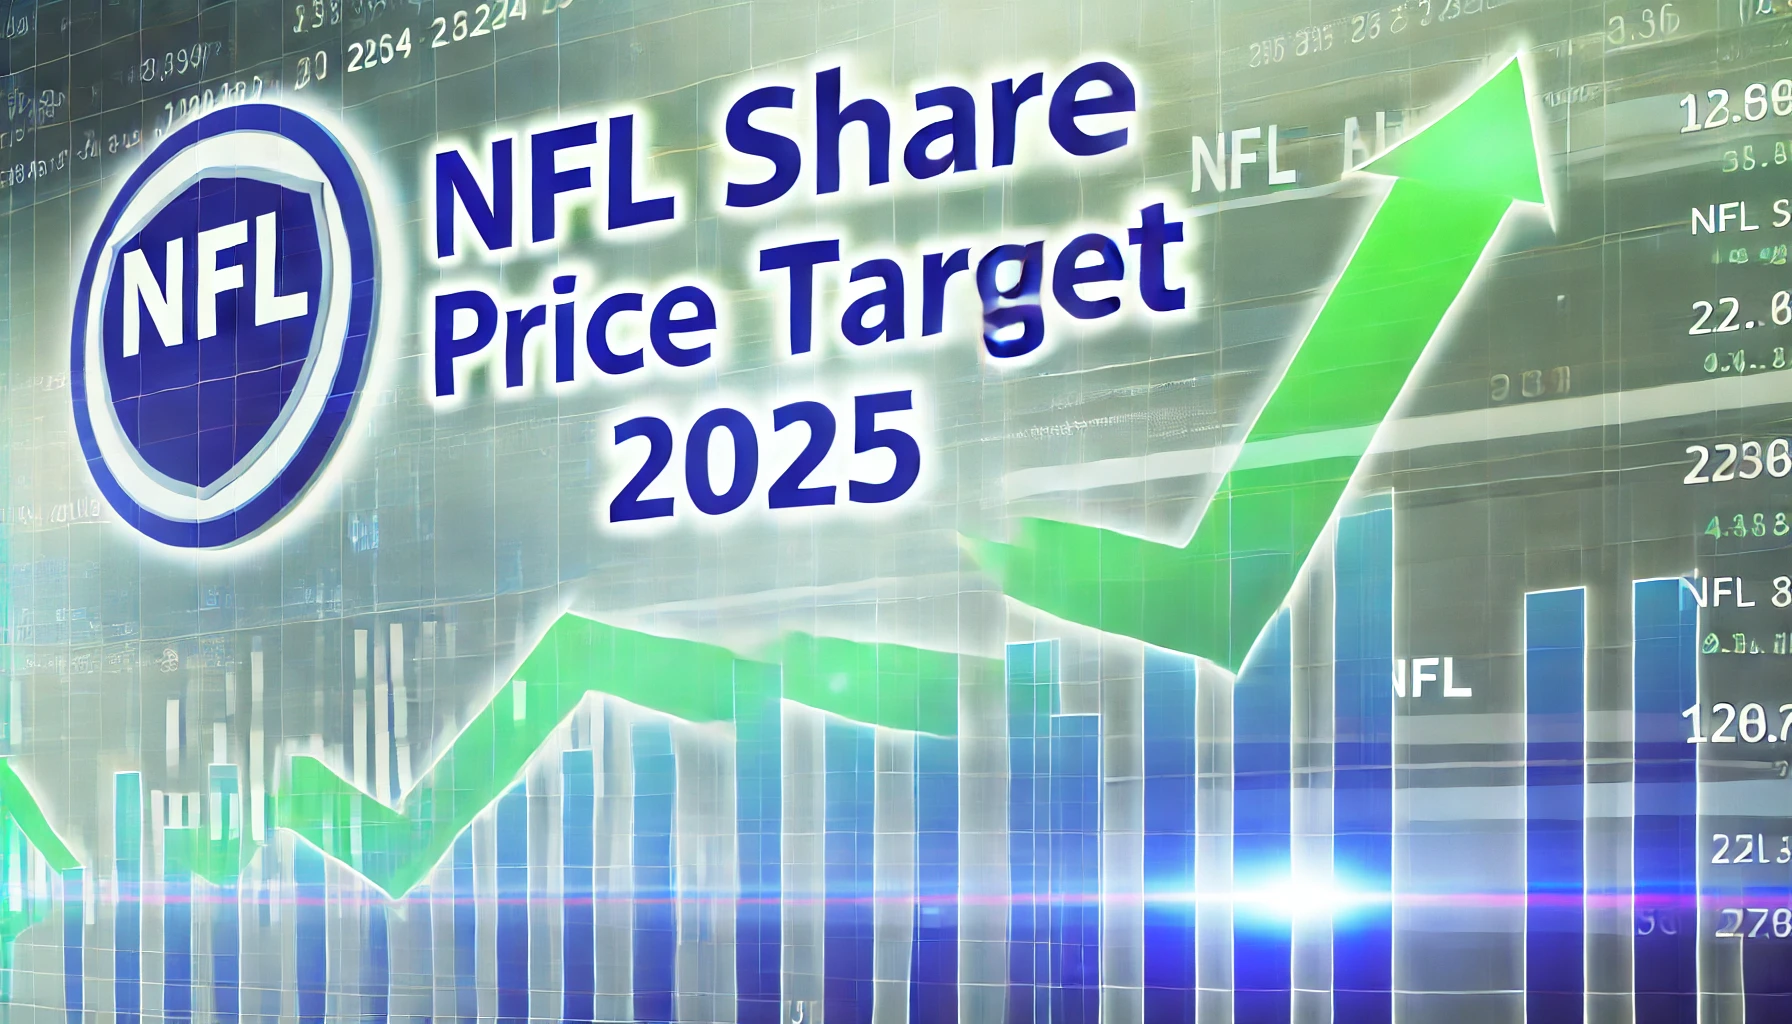 Nfl Share Price Target 2025, 2026, 2028, 2030, 2035 | एनएफएल शेयर प्राइस टारगेट 2025, 2026, 2028, 2030